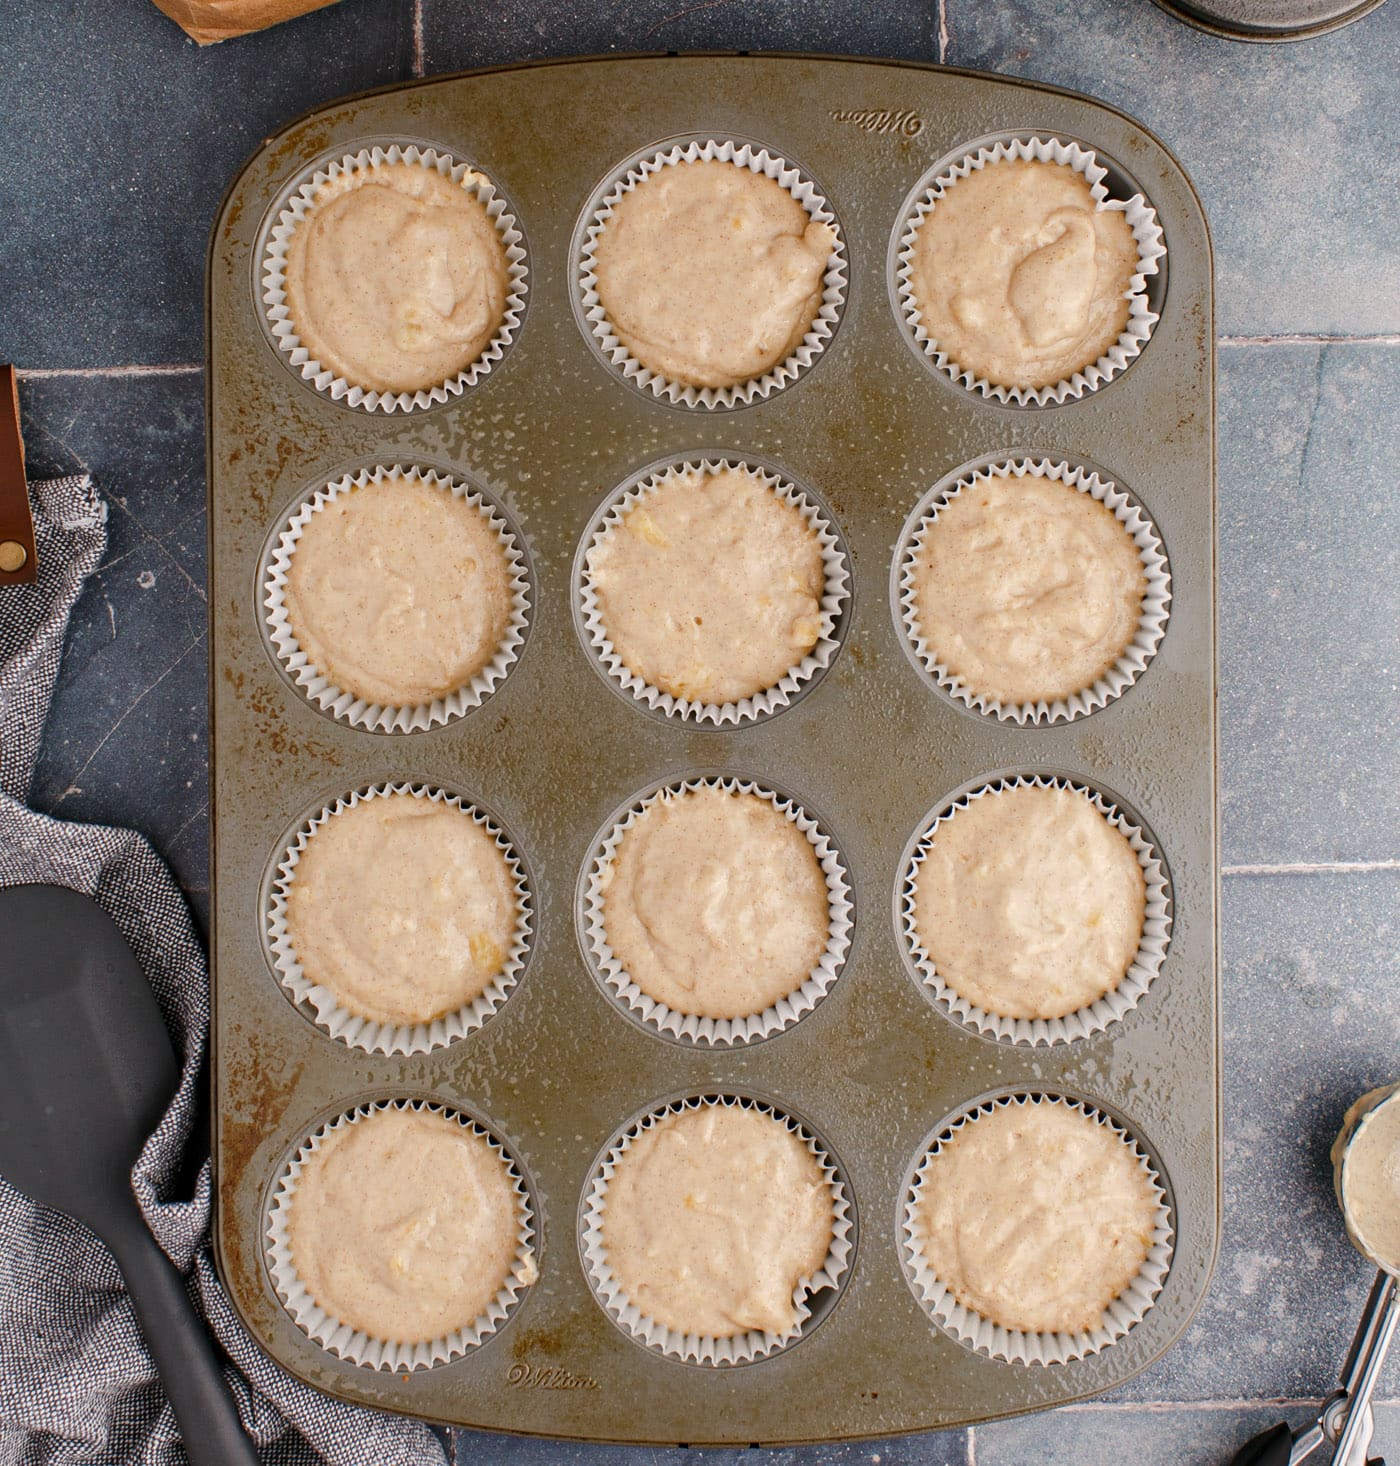 banana muffins in a baking pan